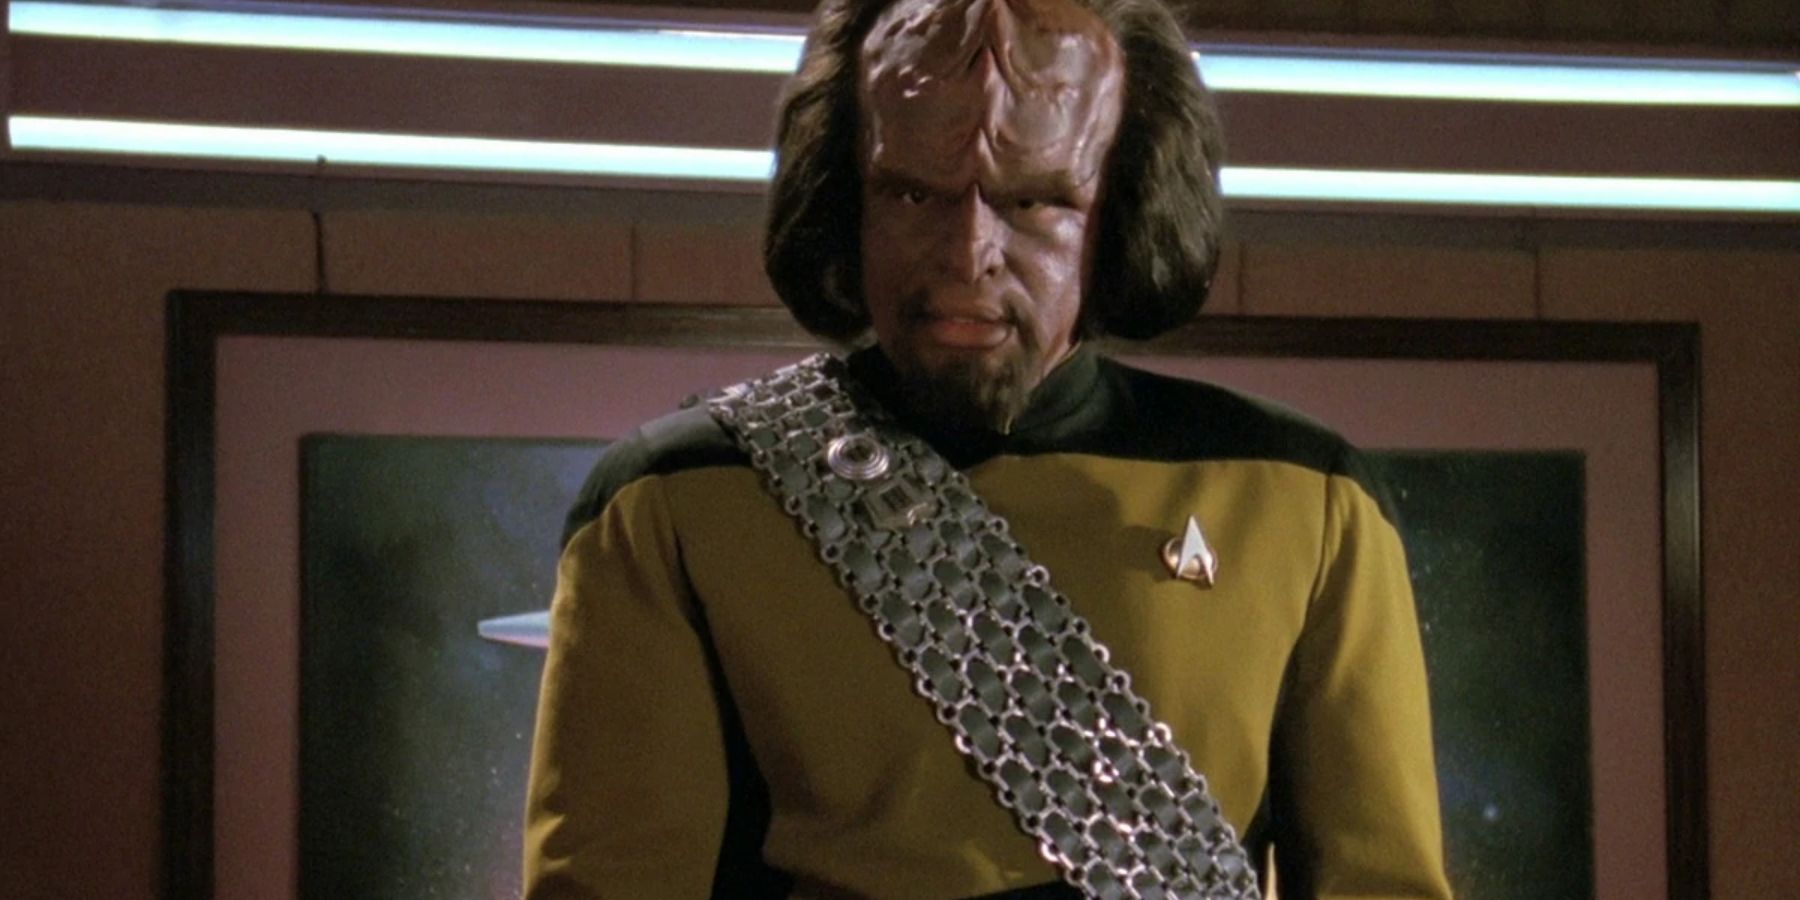 Star Trek Worf sash